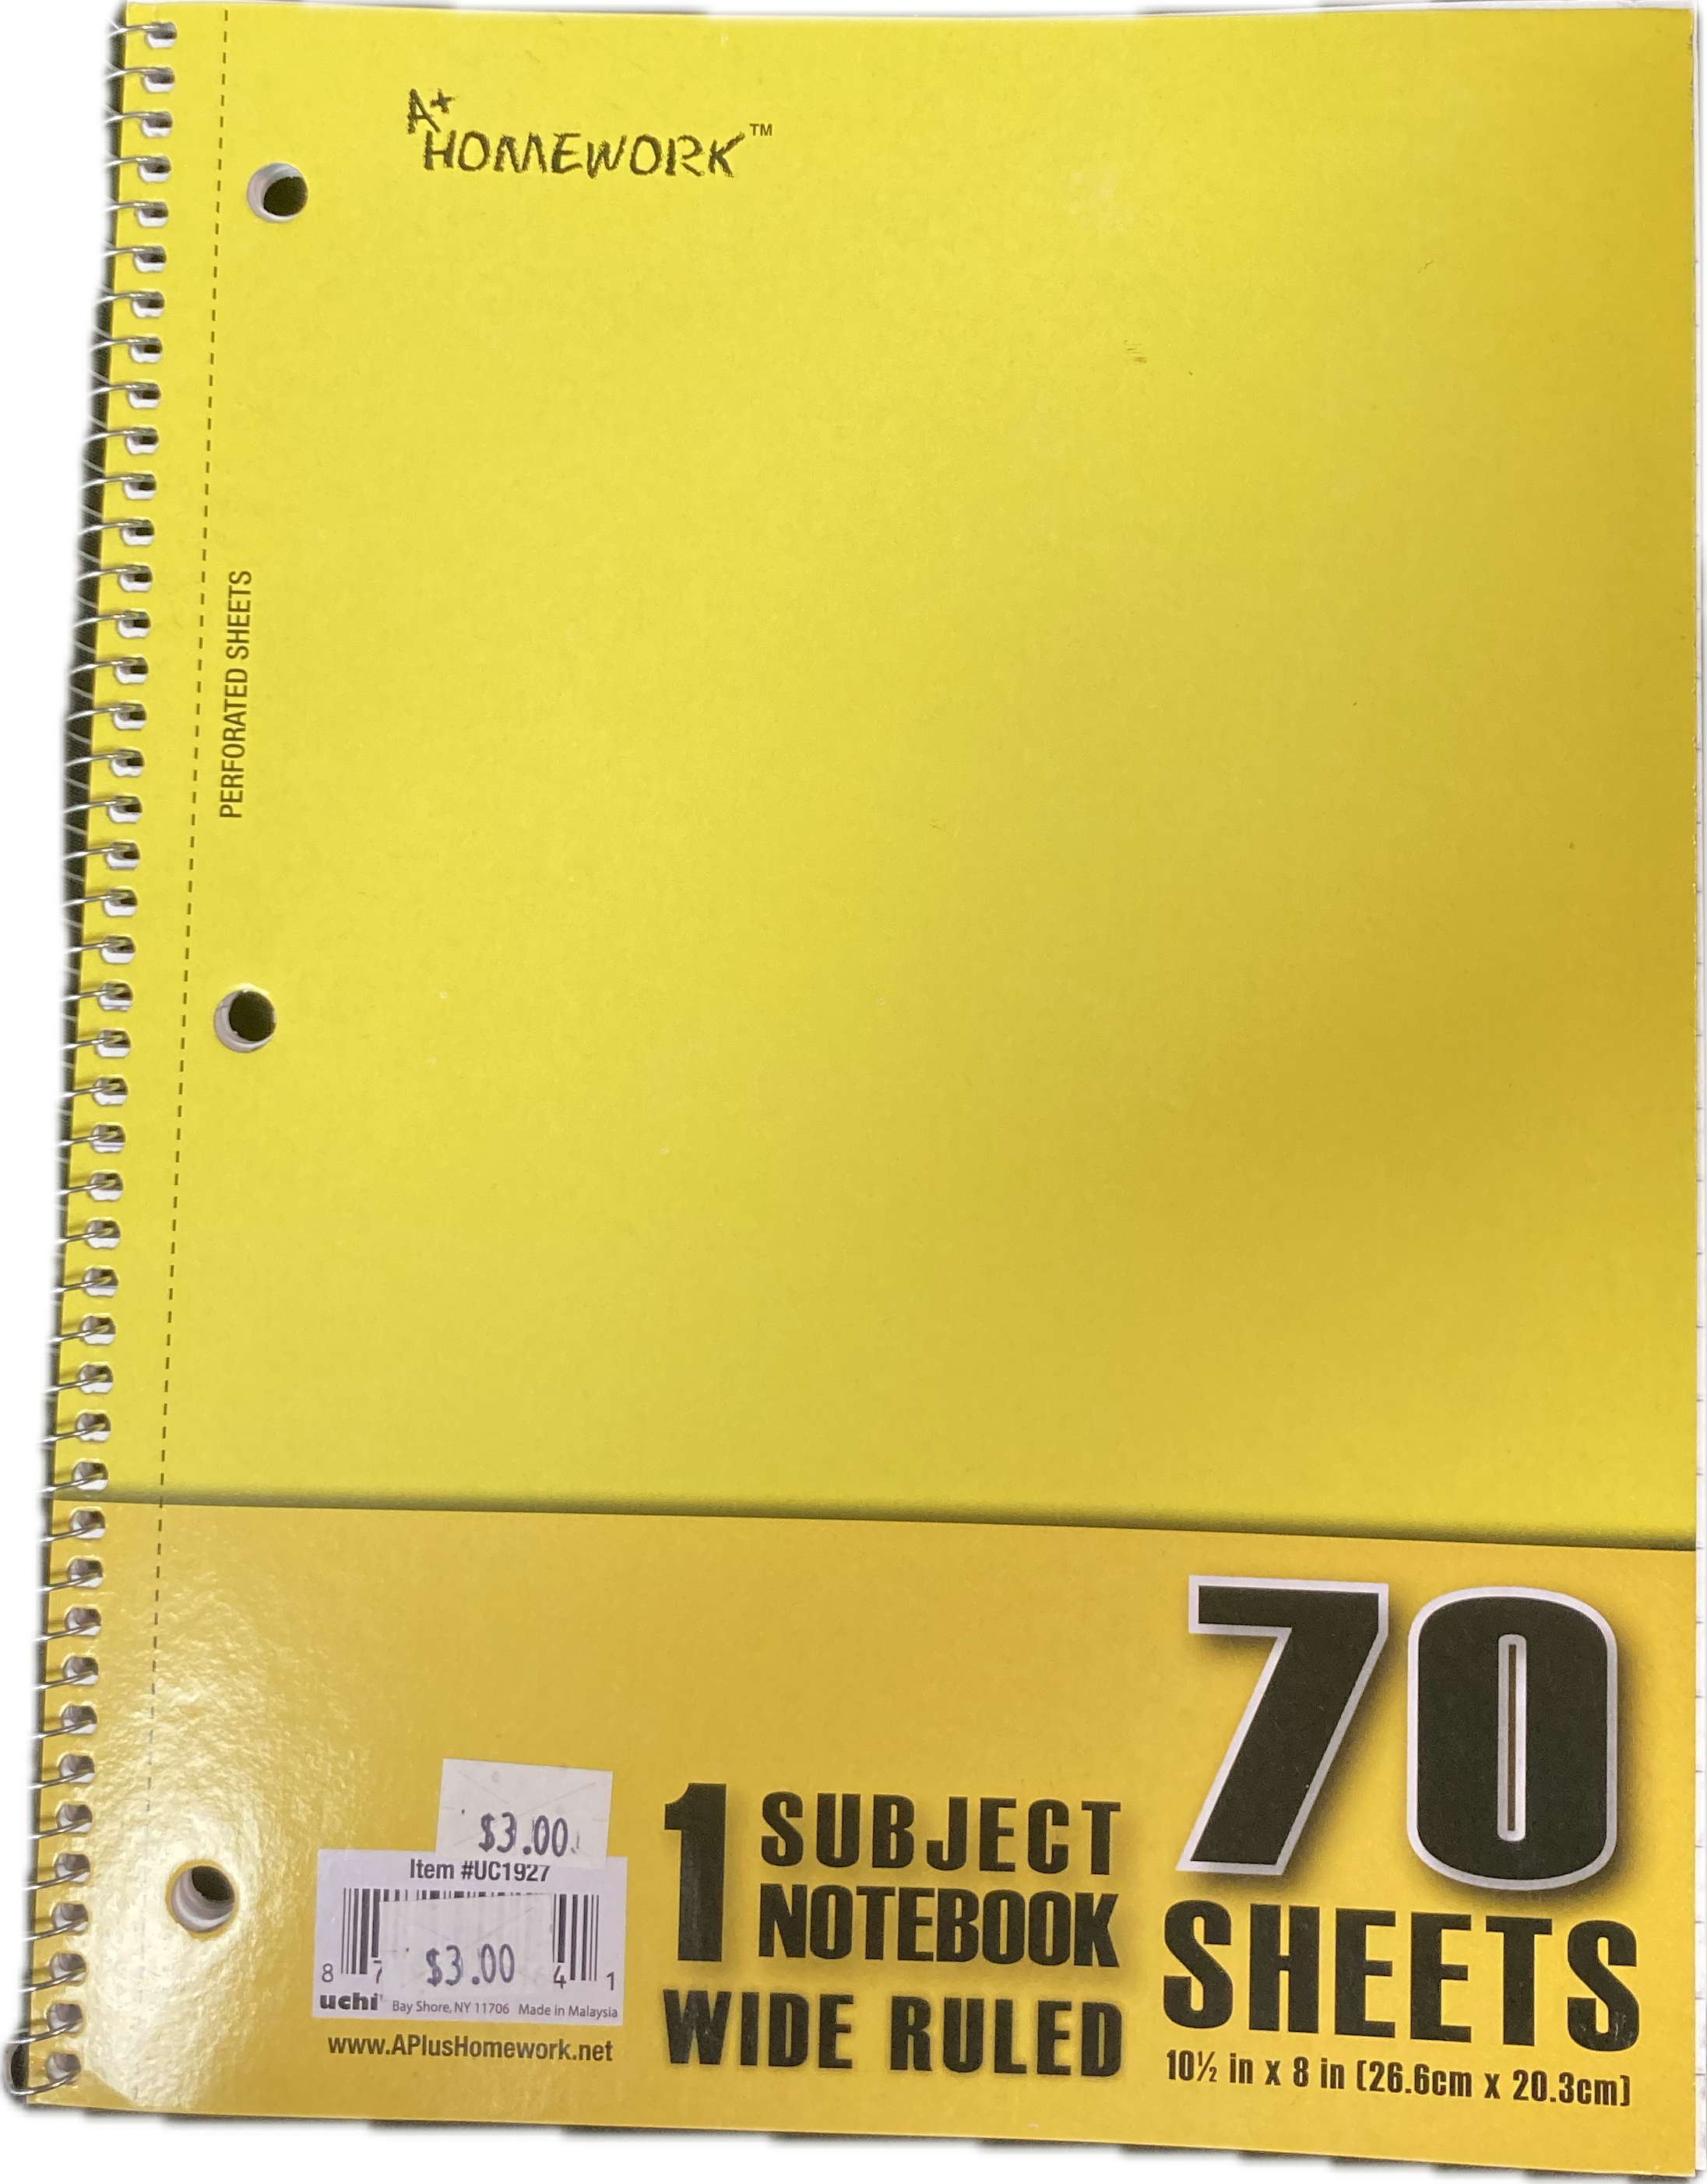 A+ Homework 1 Subject Wide Ruled Spiral Notebook - 1 Per Order